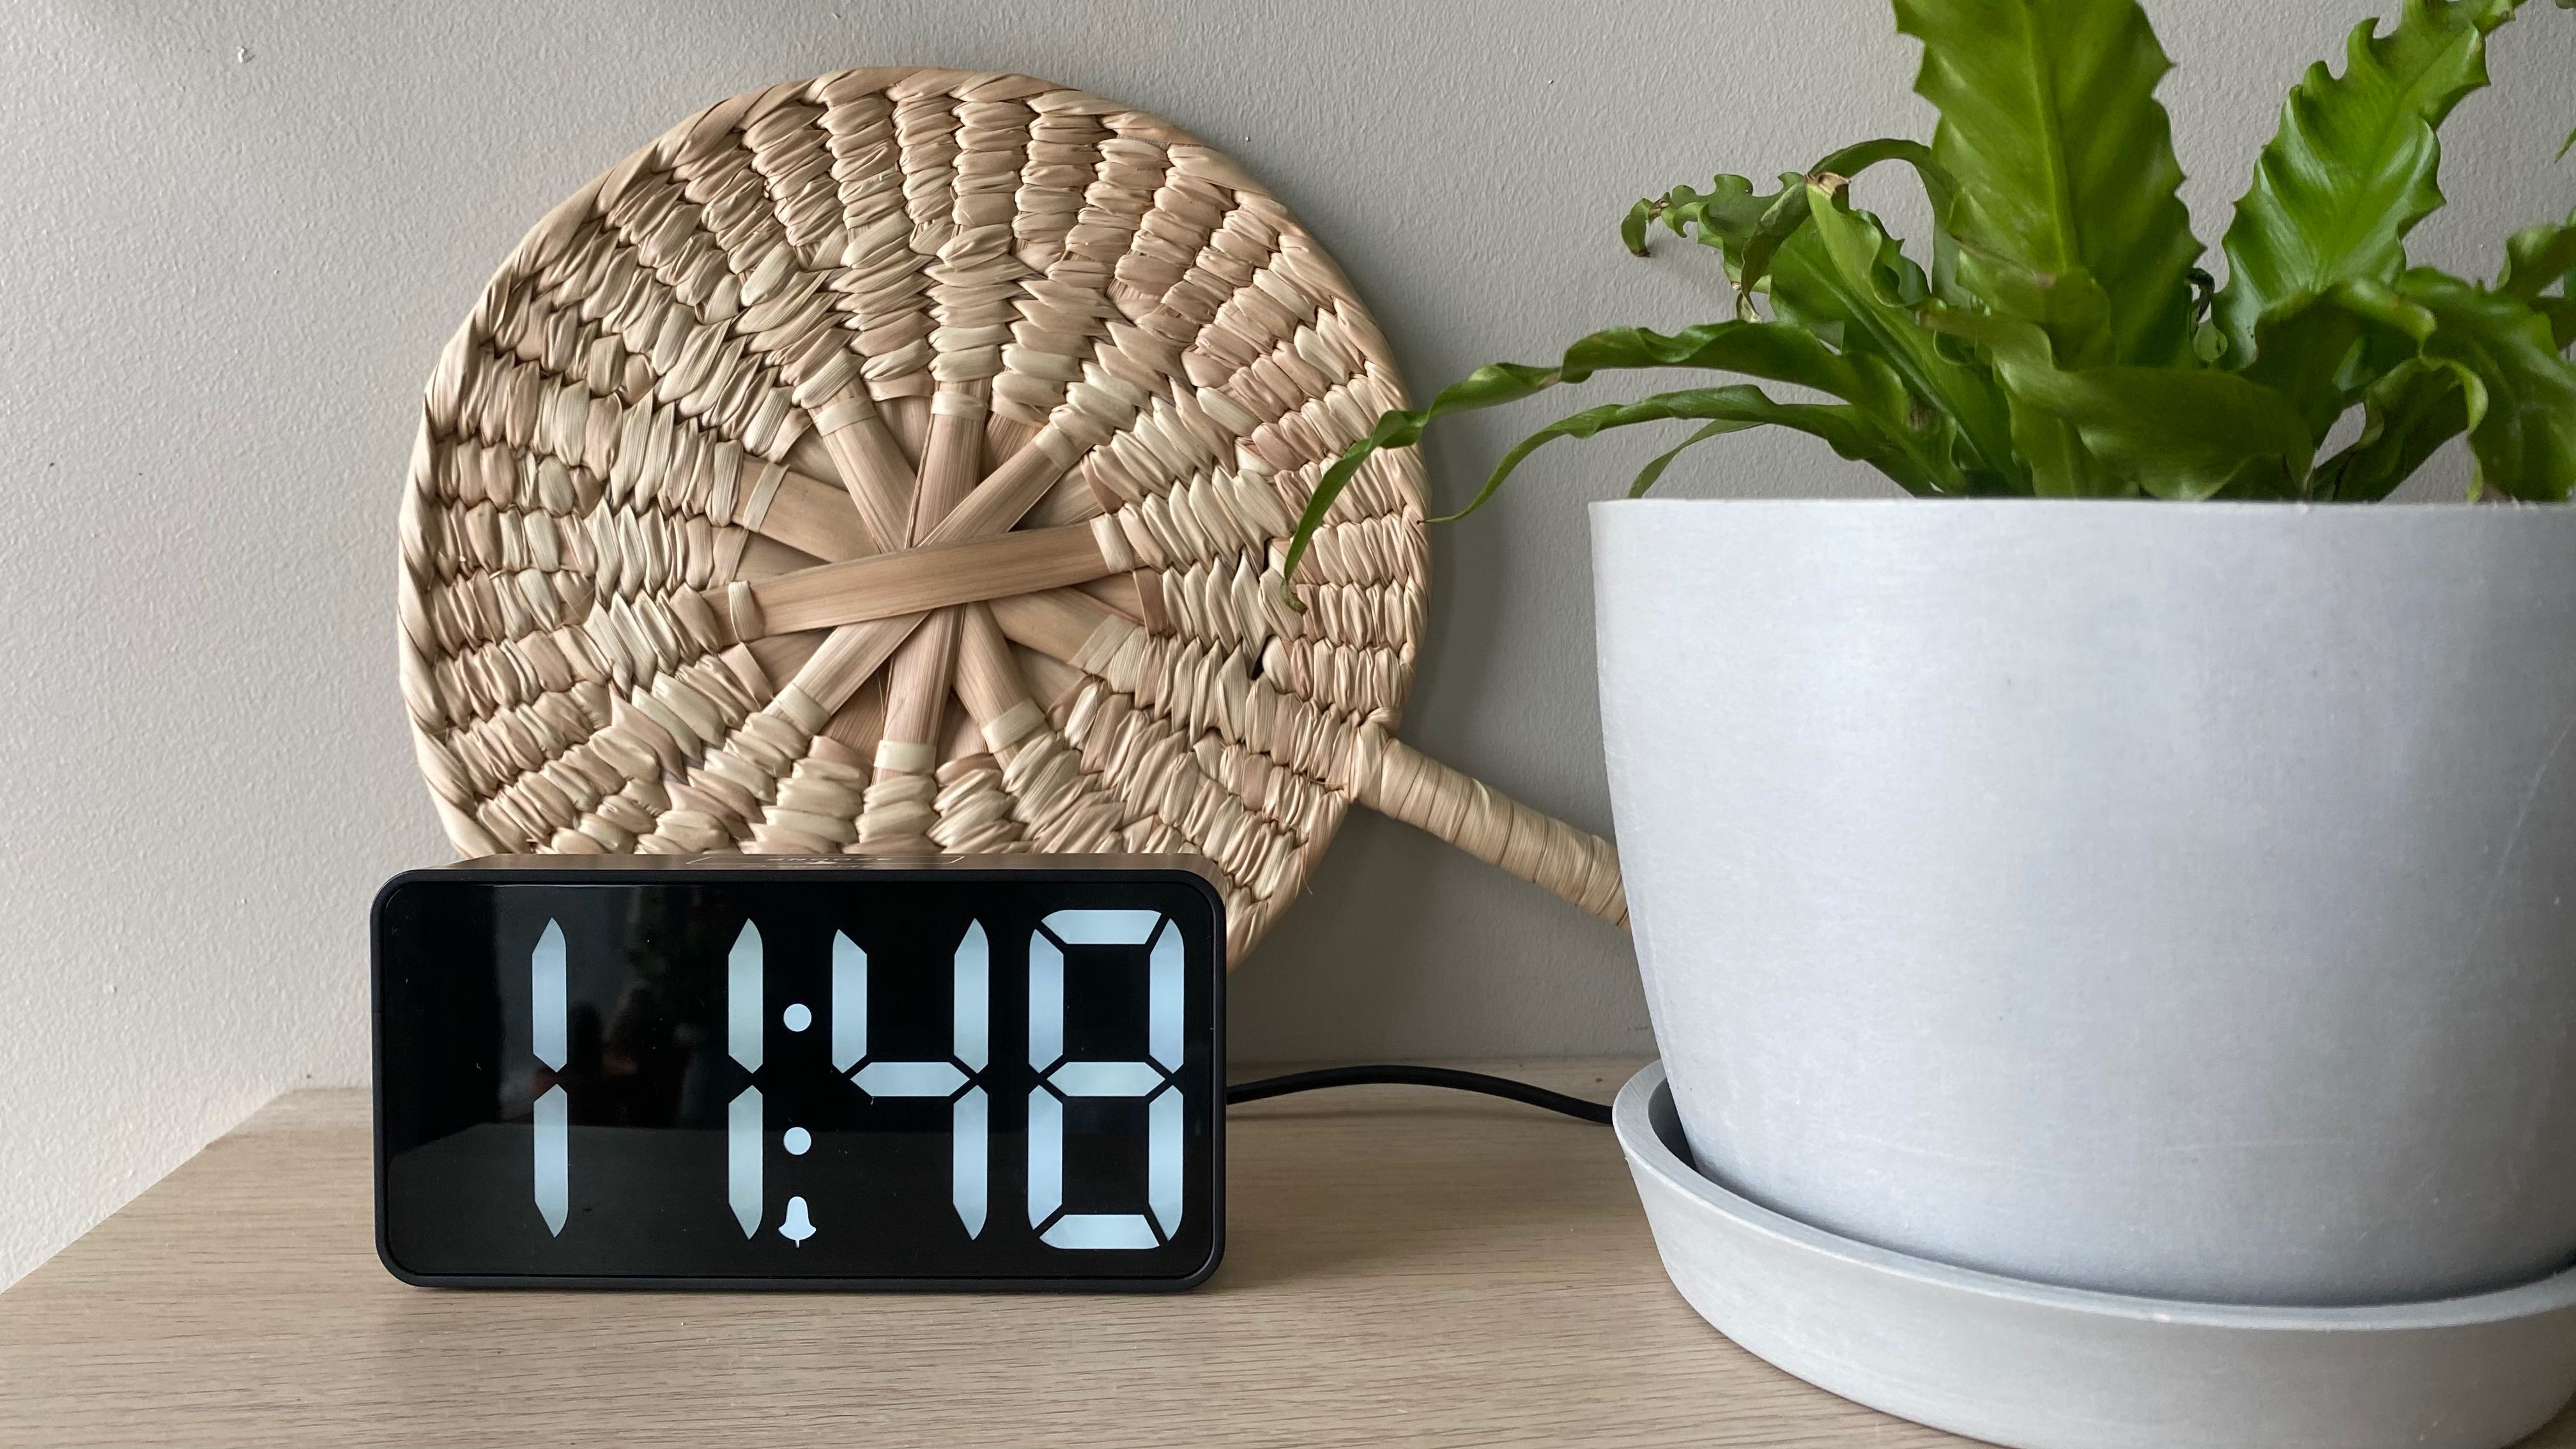 Top digital alarm clock for early risers